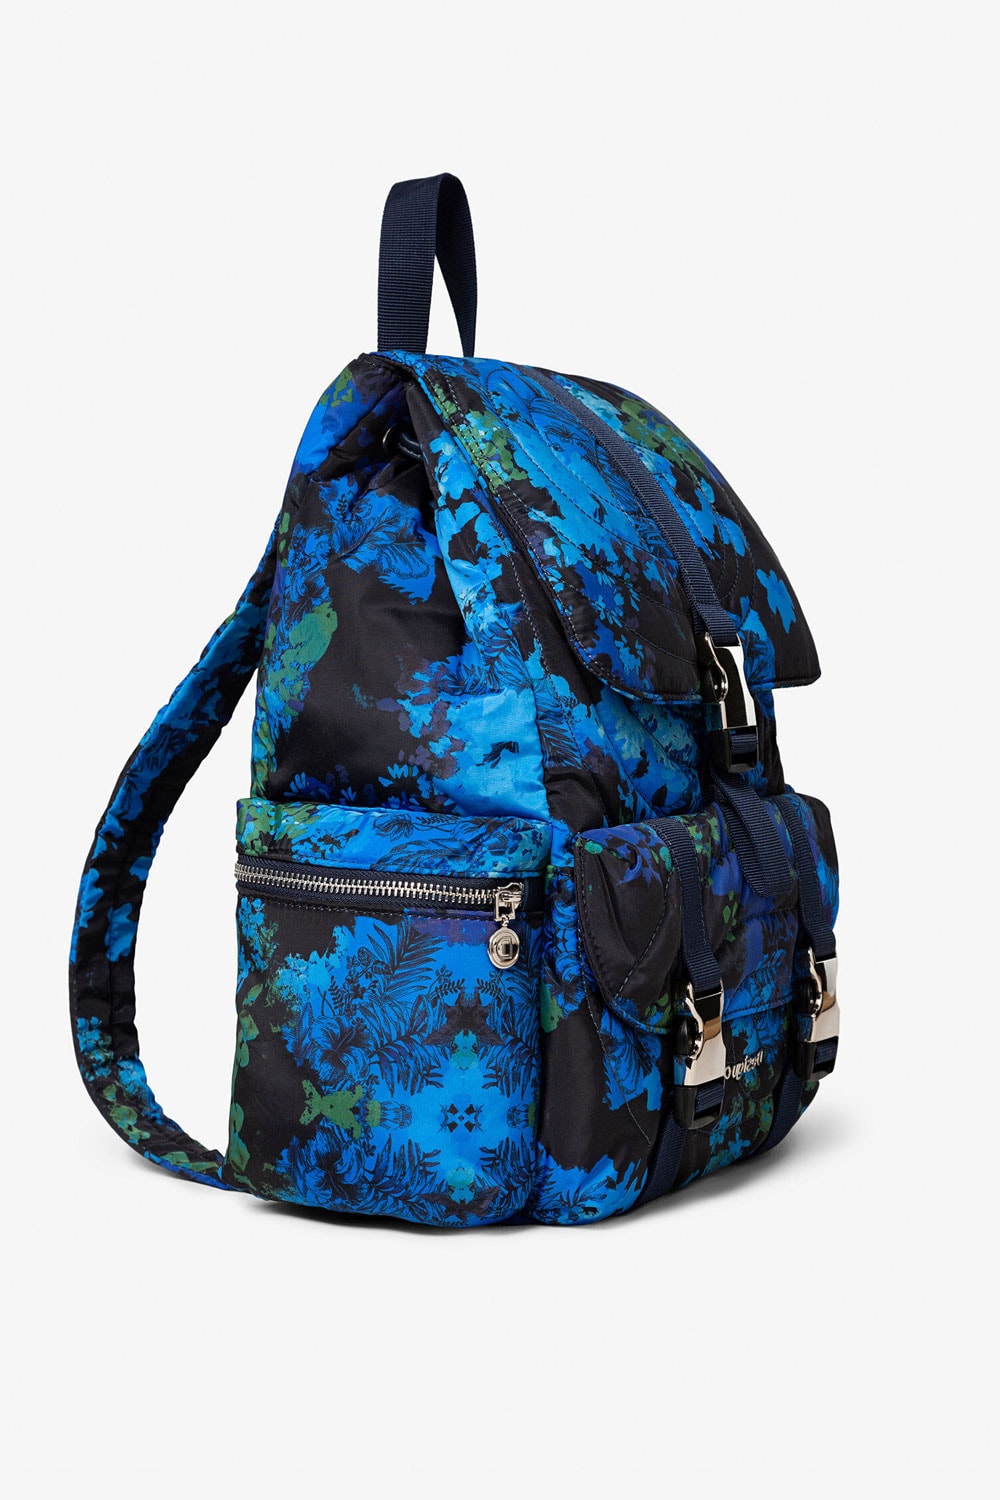 desigual camoflower backpack spring summer 2020